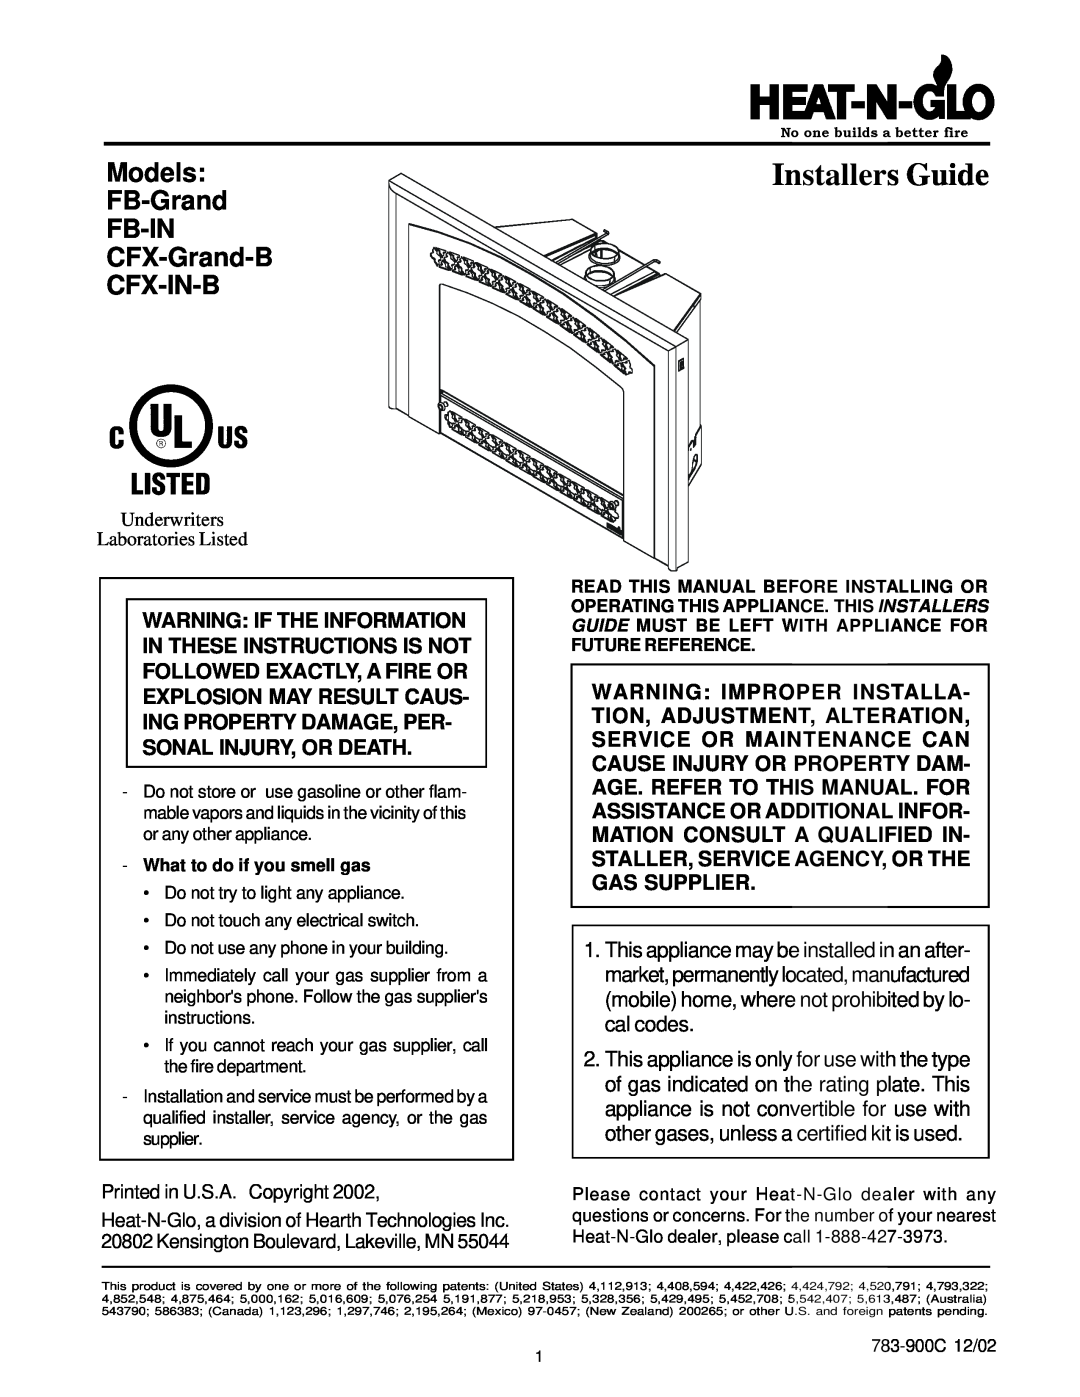 Heat & Glo LifeStyle manual Models FB-Grand FB-IN CFX-Grand-B CFX-IN-B, Installers Guide 